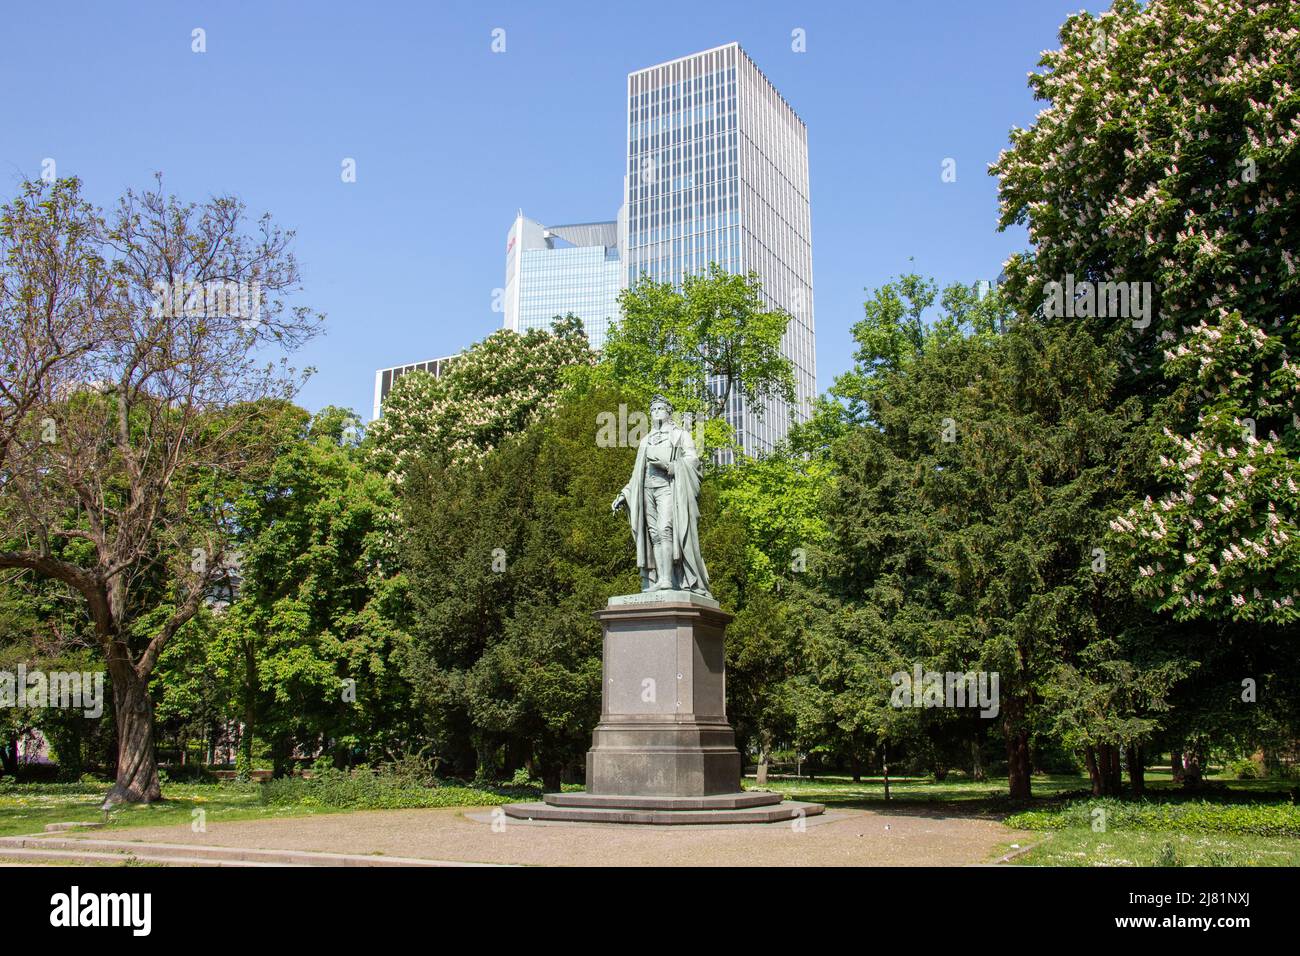 Monumento Friedrich Schiller, parco Taunusanlage, Francoforte sul meno, Assia, Germania Foto Stock